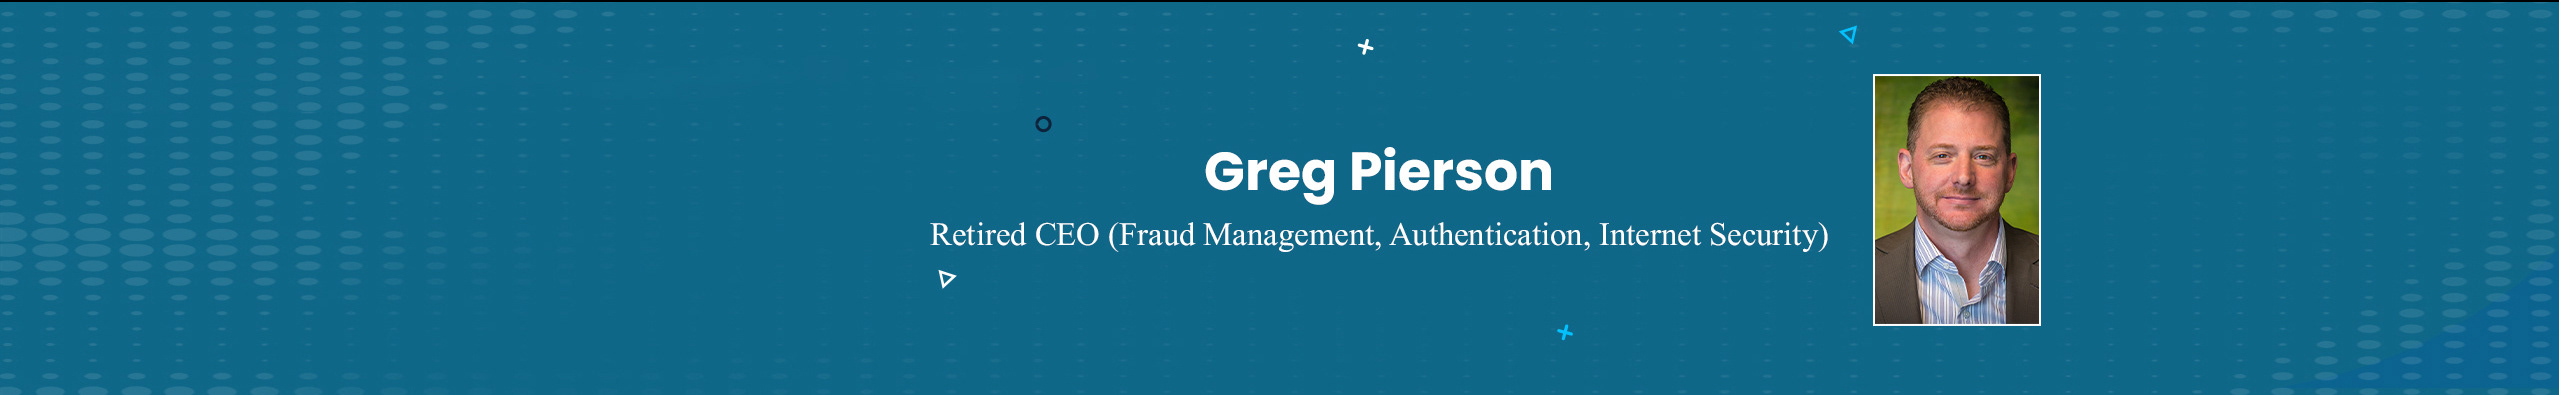 Greg Pierson's profile banner